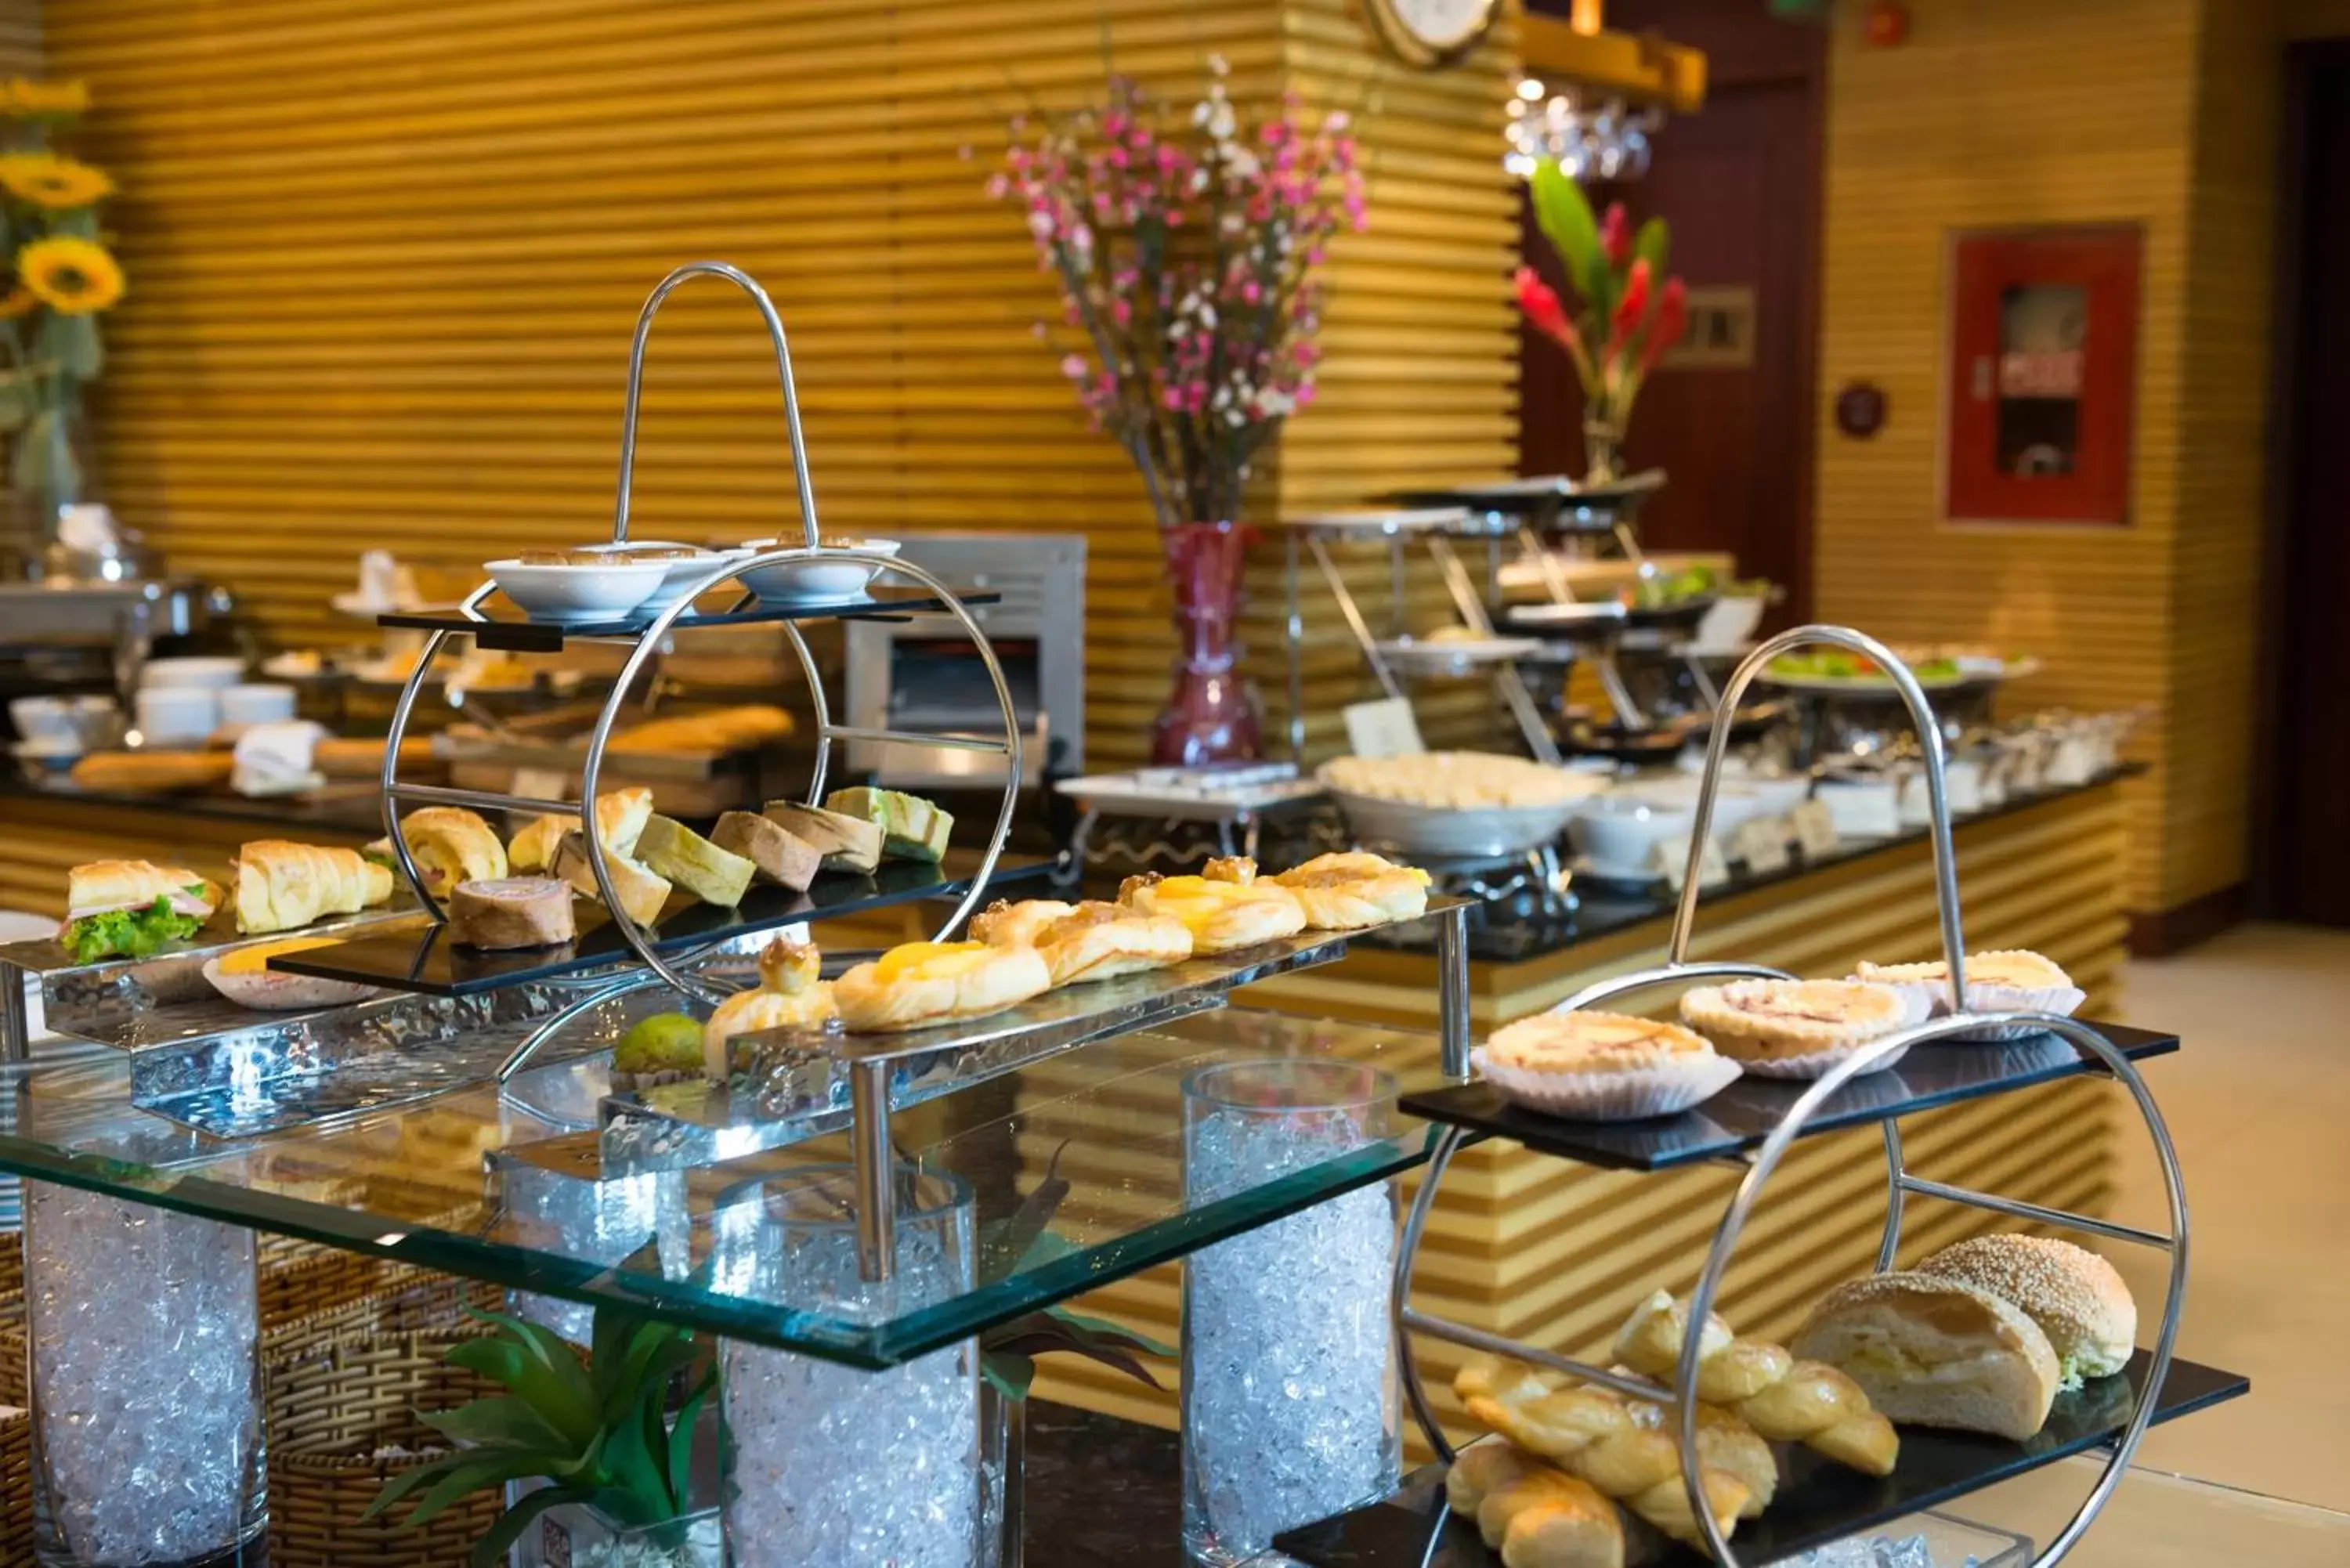 Buffet breakfast in Northern Saigon Hotel